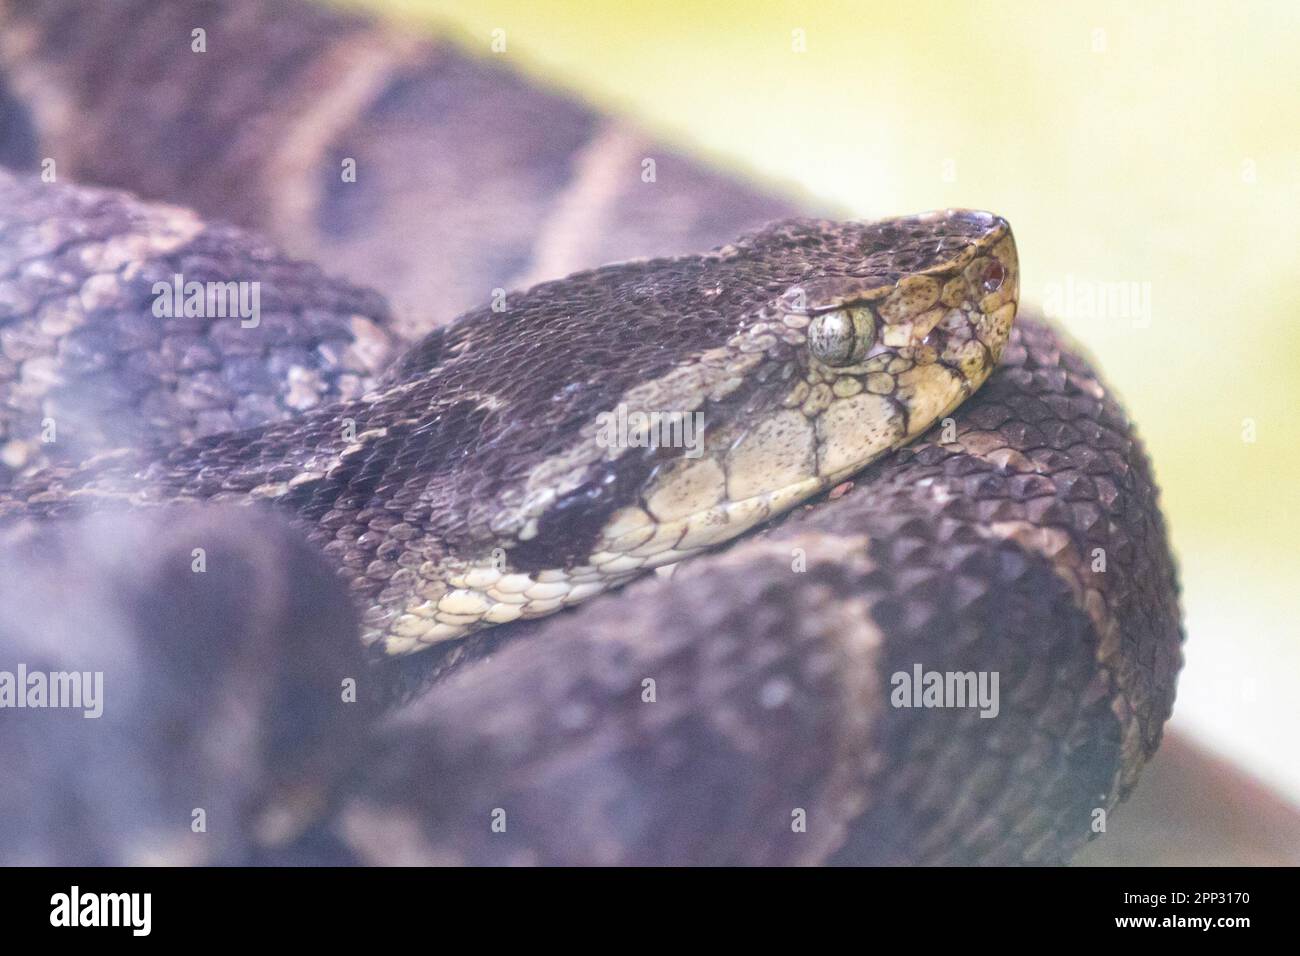 Jararaca Snake (Bothrops Jararaca) on the ground. Poisonous Brazilian snake. Caiçara snake, urutu snake Stock Photo